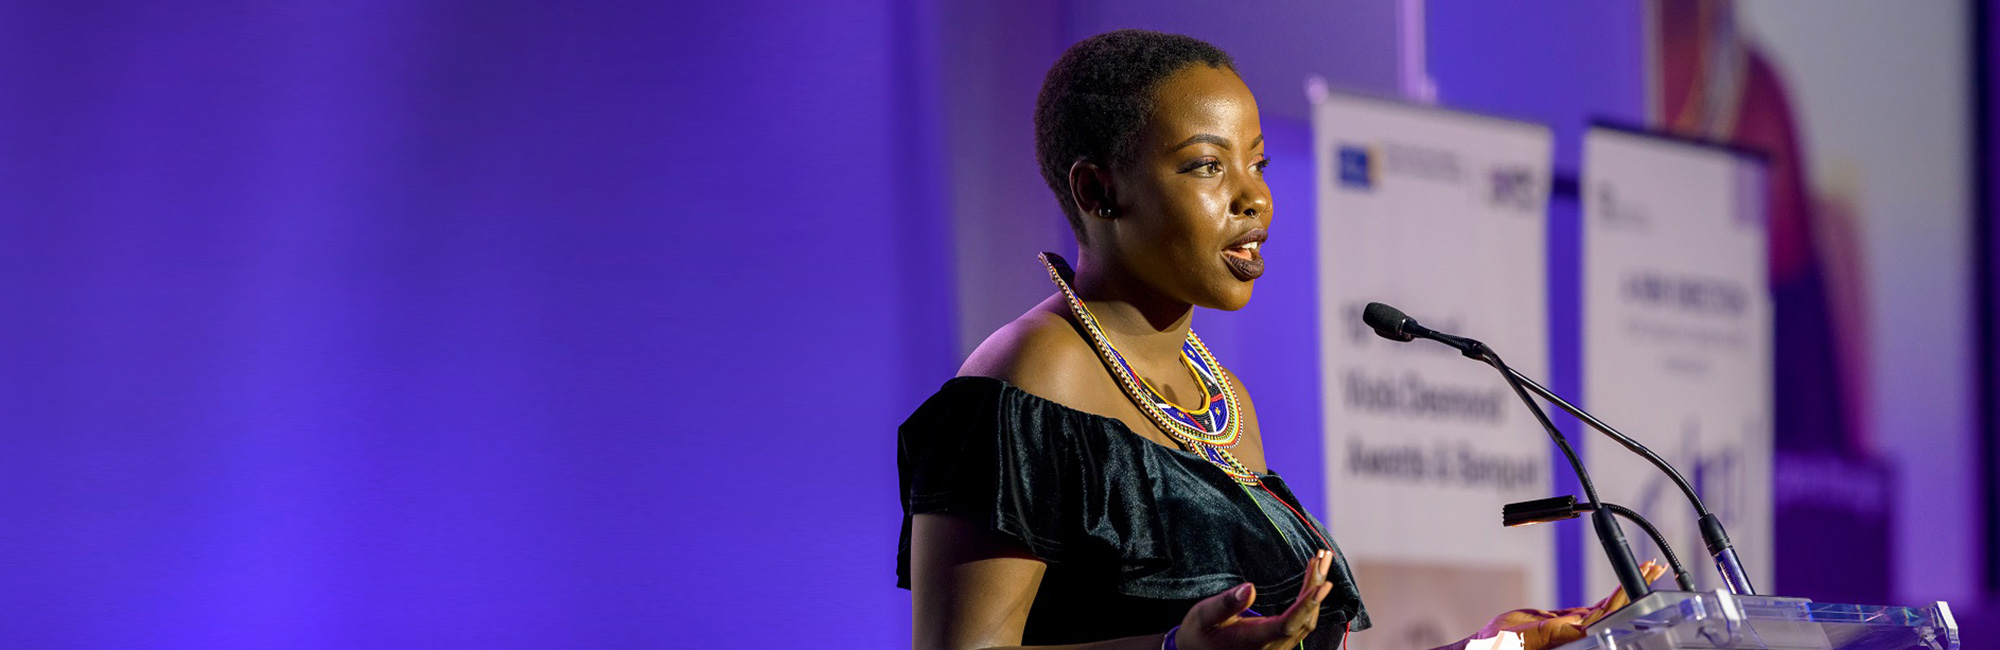 Ryerson student Susanne Nyaga at the 2018 Viola Desmond Awards